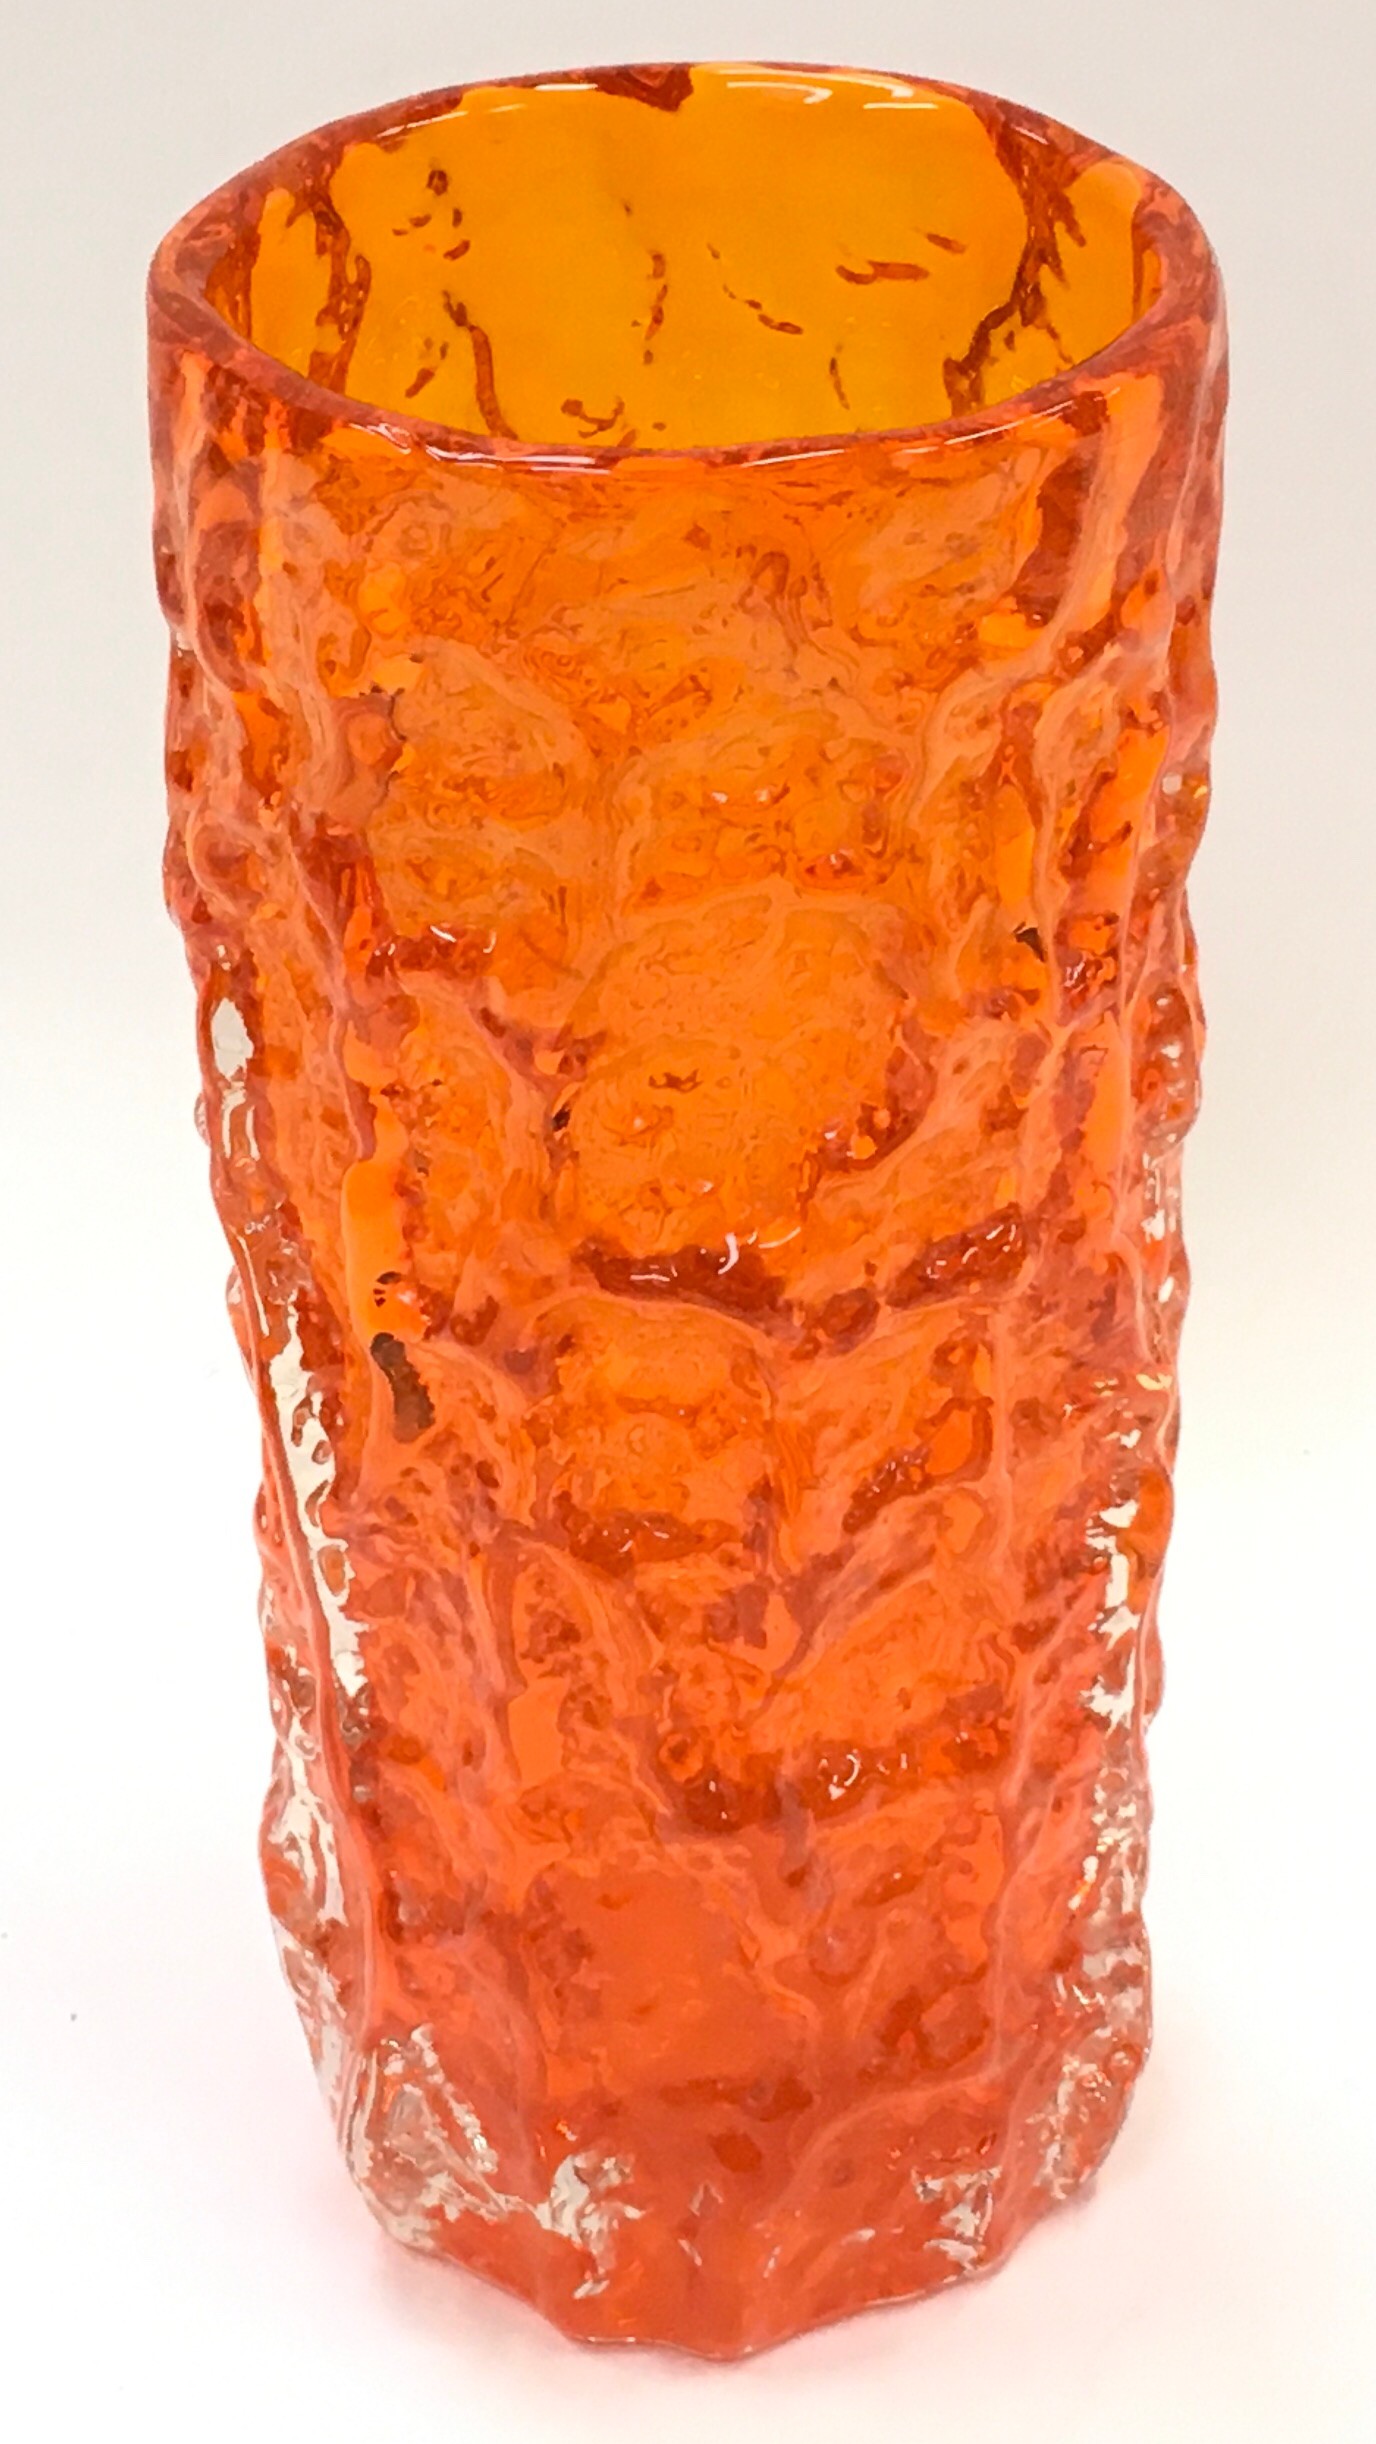 Whitefriars Tangerine textured glass vase designed by Geoffrey Baxter 20 cm high 8.5cm diameter. - Image 4 of 5